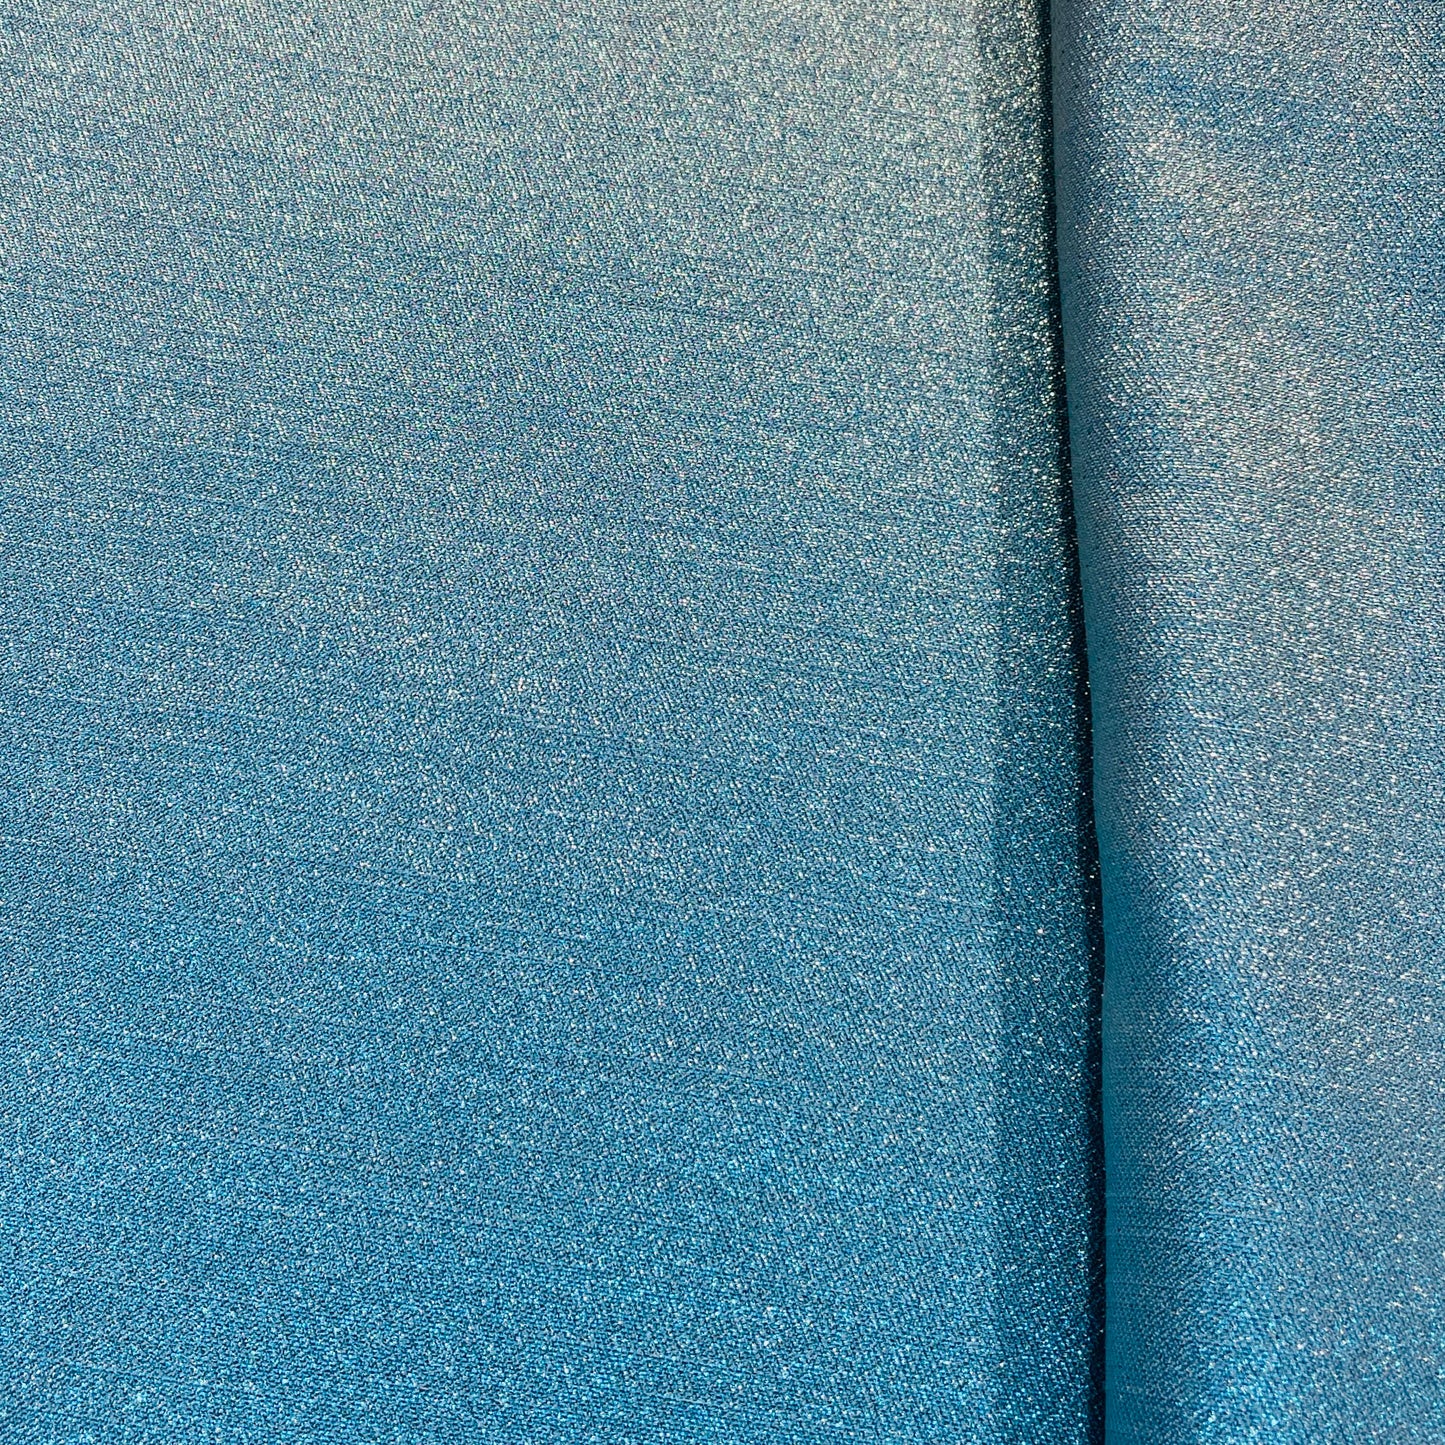 Aqua Blue & Platinum Gold Two Tone Brocade Fabric